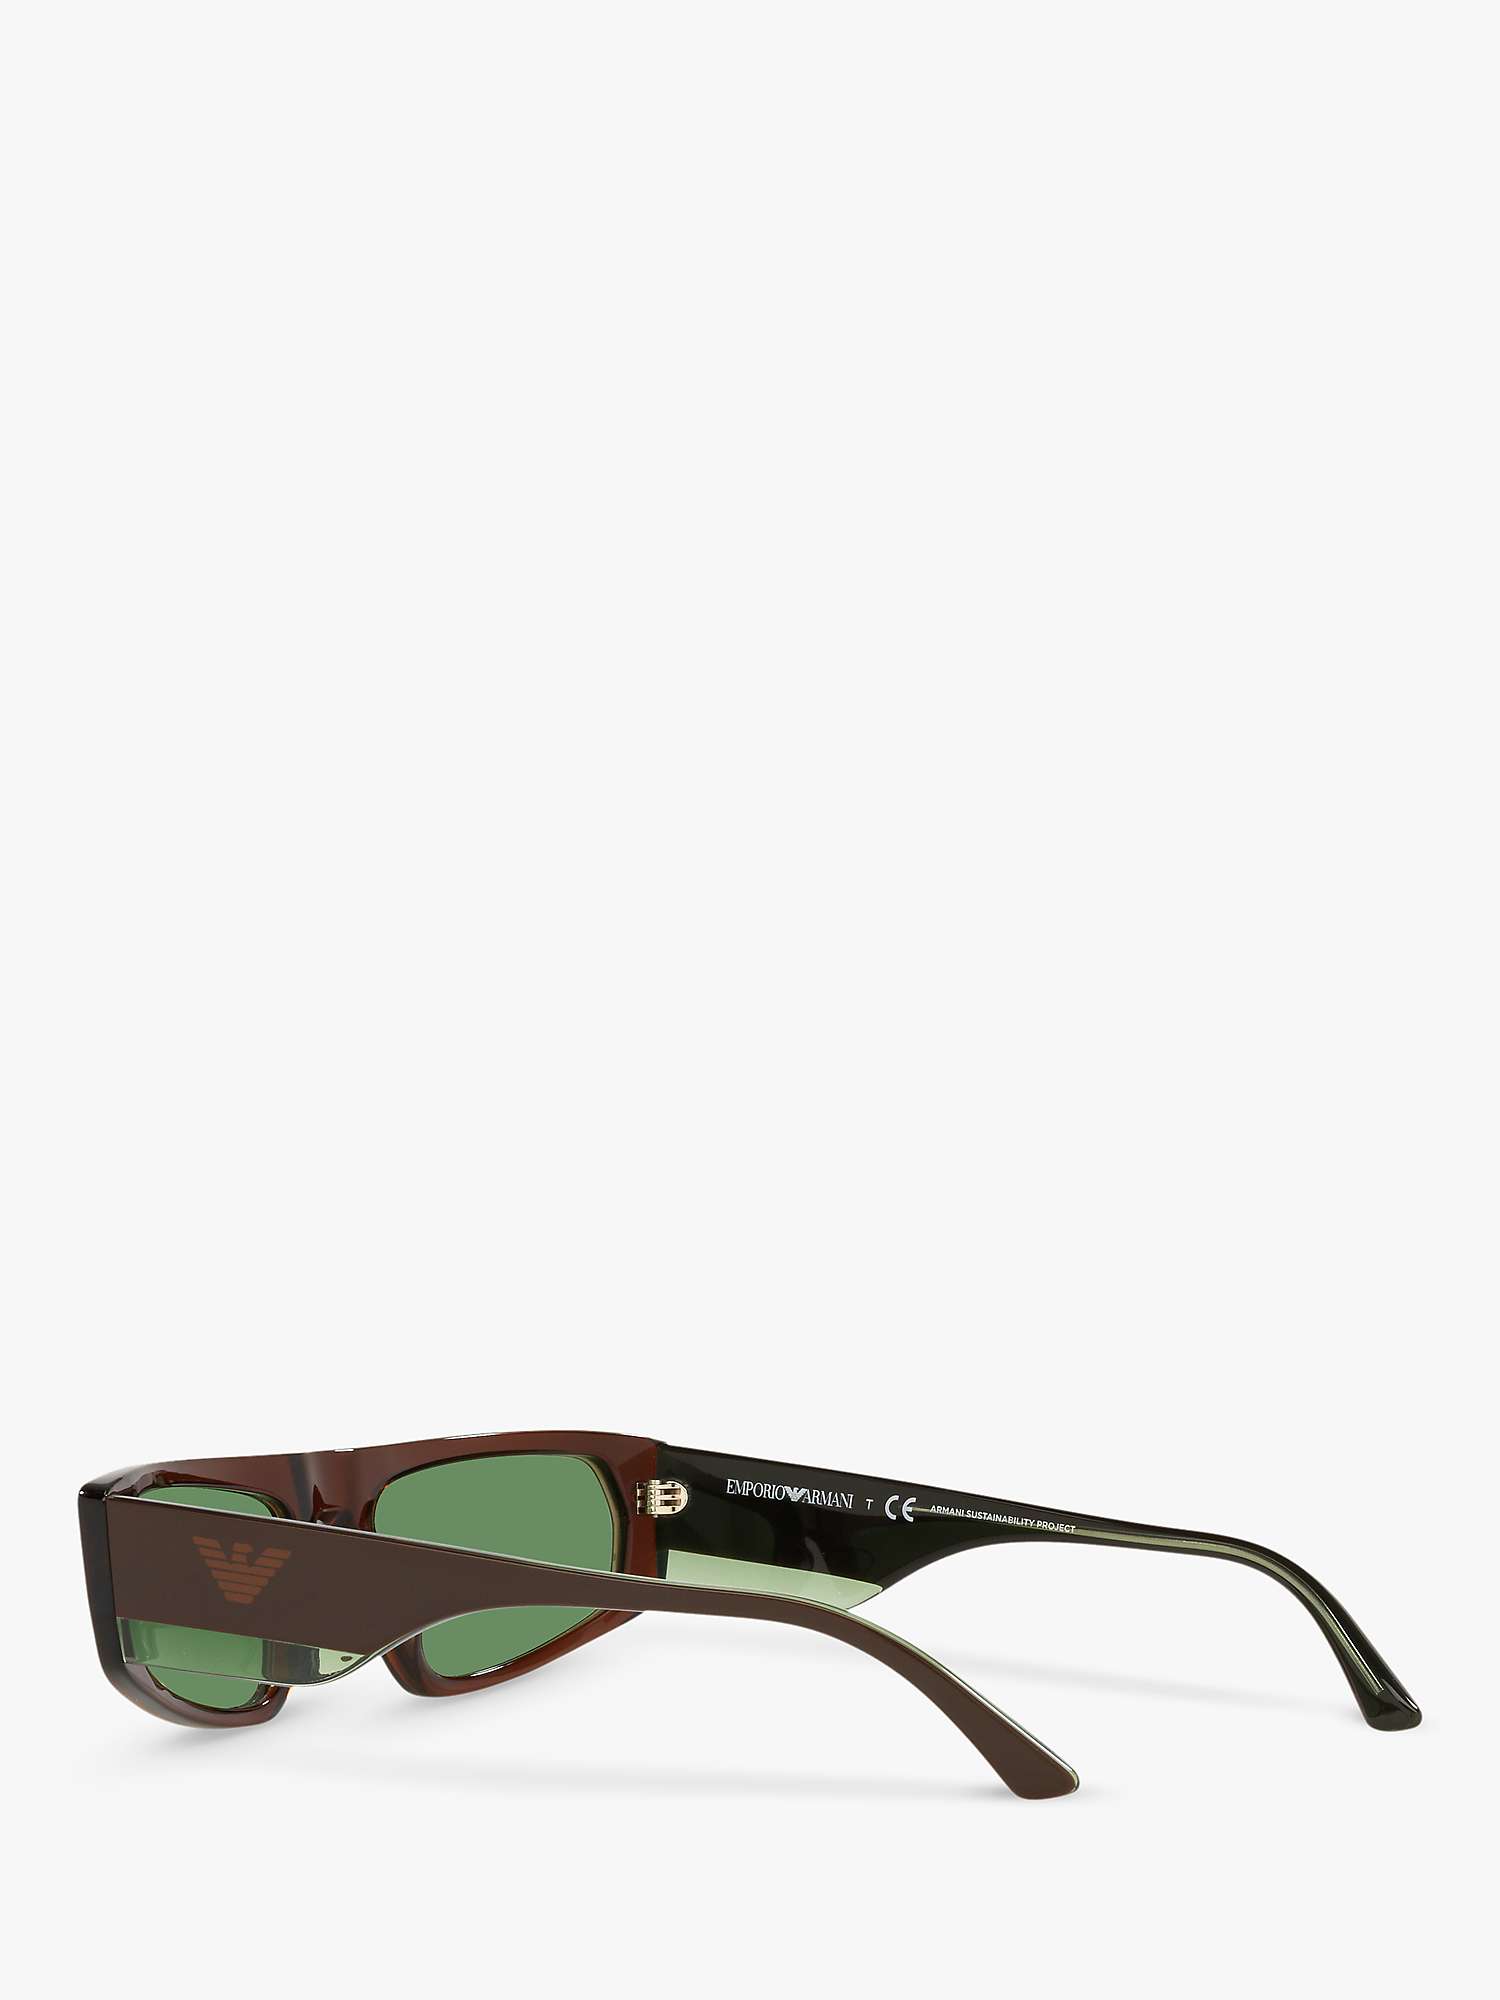 Buy Emporio Armani EA4168 Men's Pillow Sunglasses, Brown/Green Online at johnlewis.com